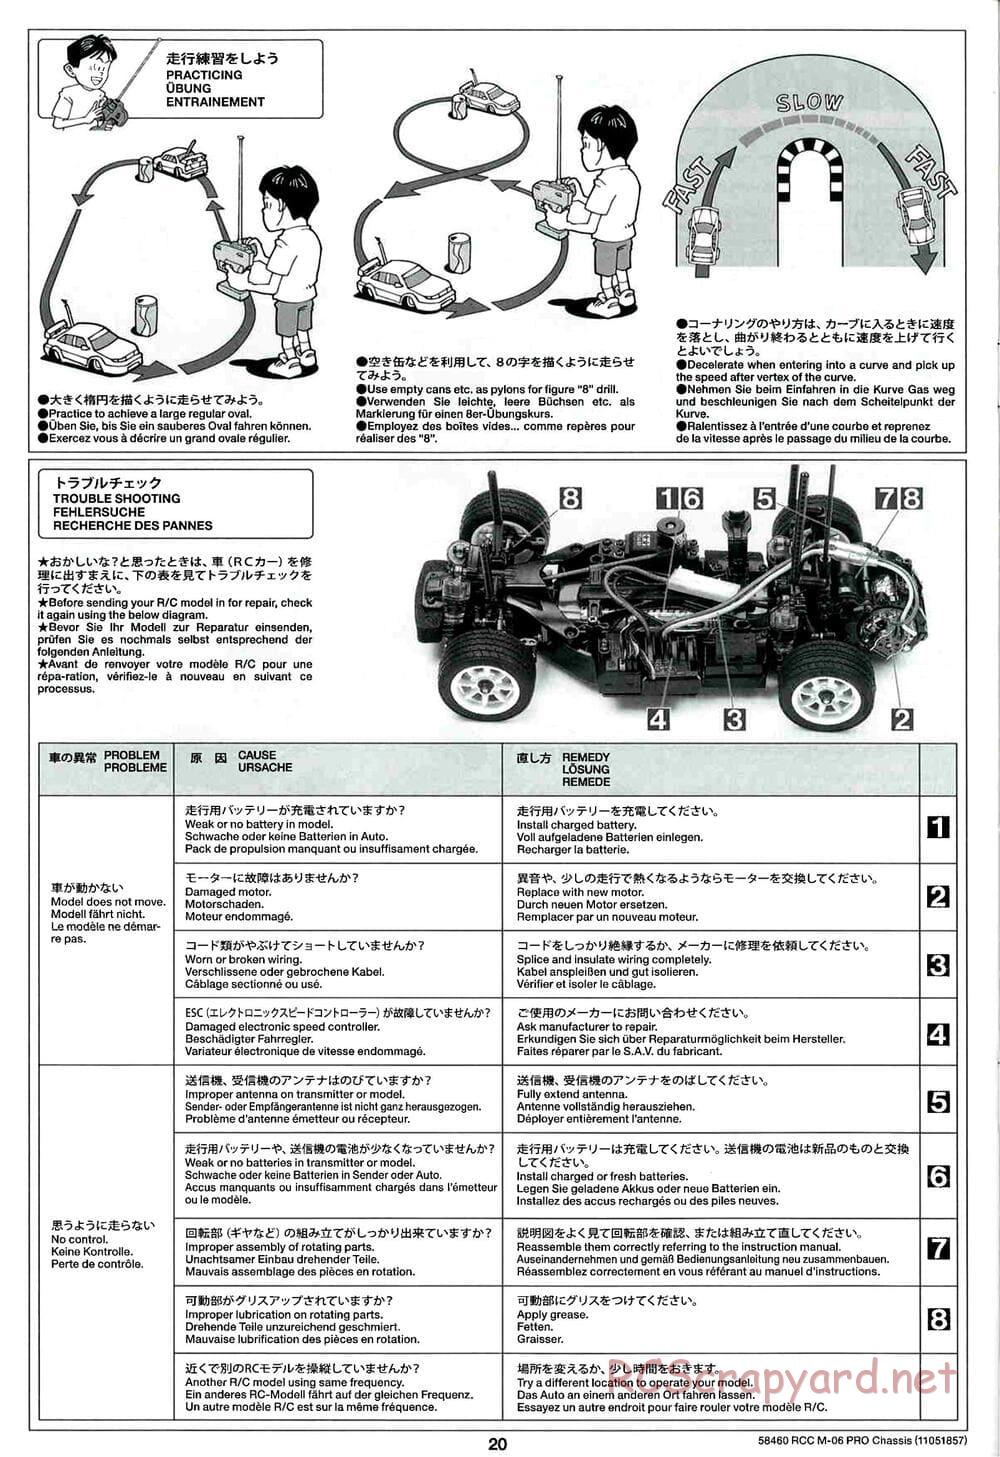 Tamiya - M-06 Pro Chassis - Manual - Page 20